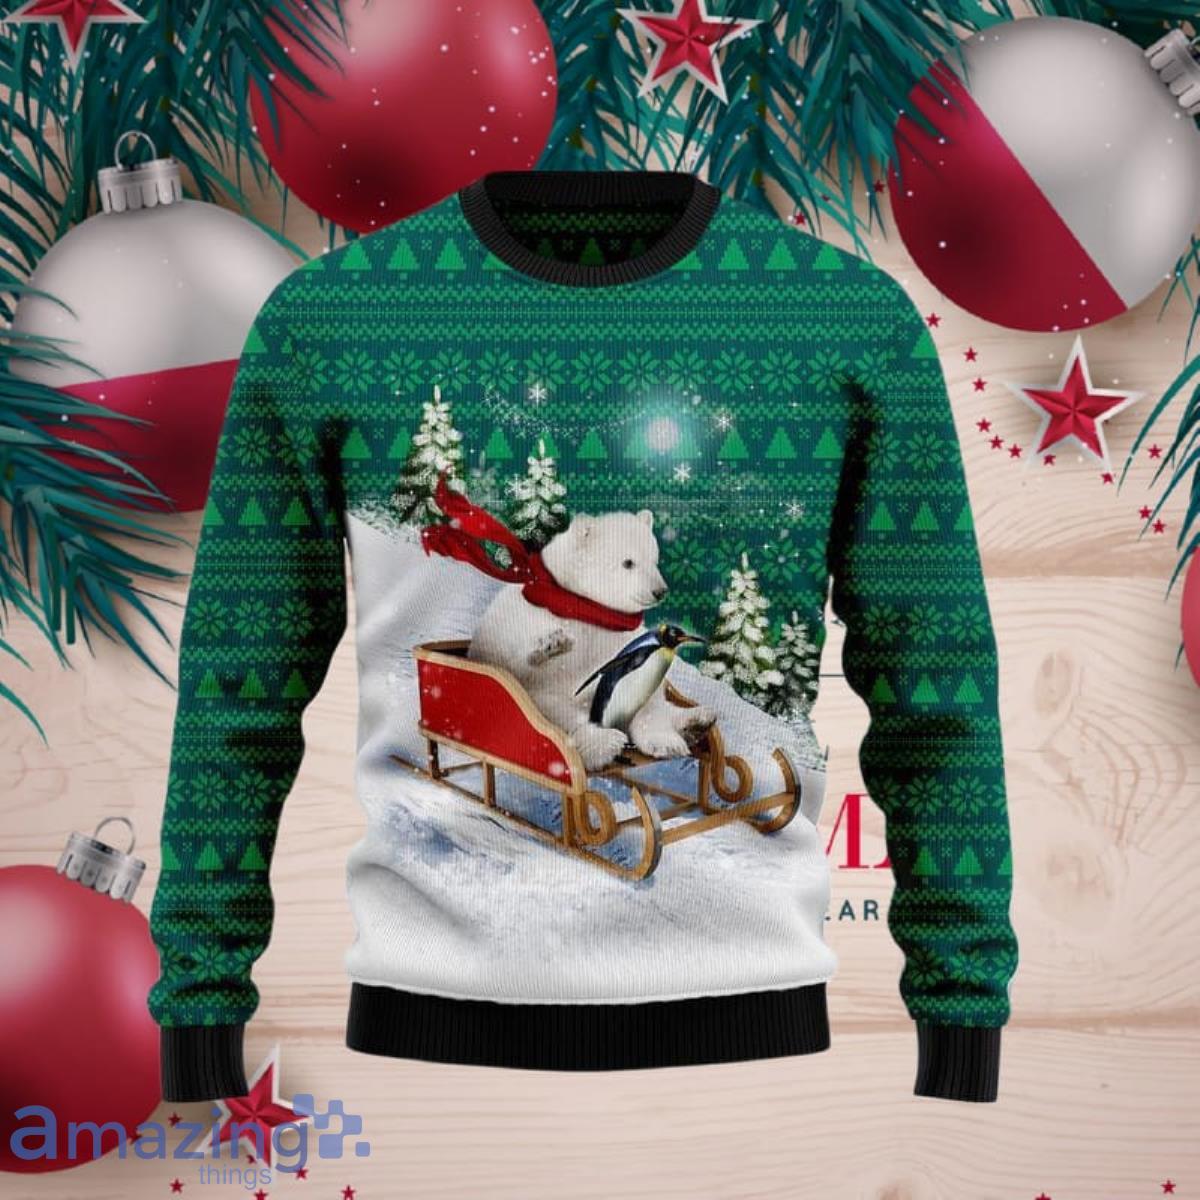  Ugly Christmas Sweater Santa Sleigh All Day Sweatshirt